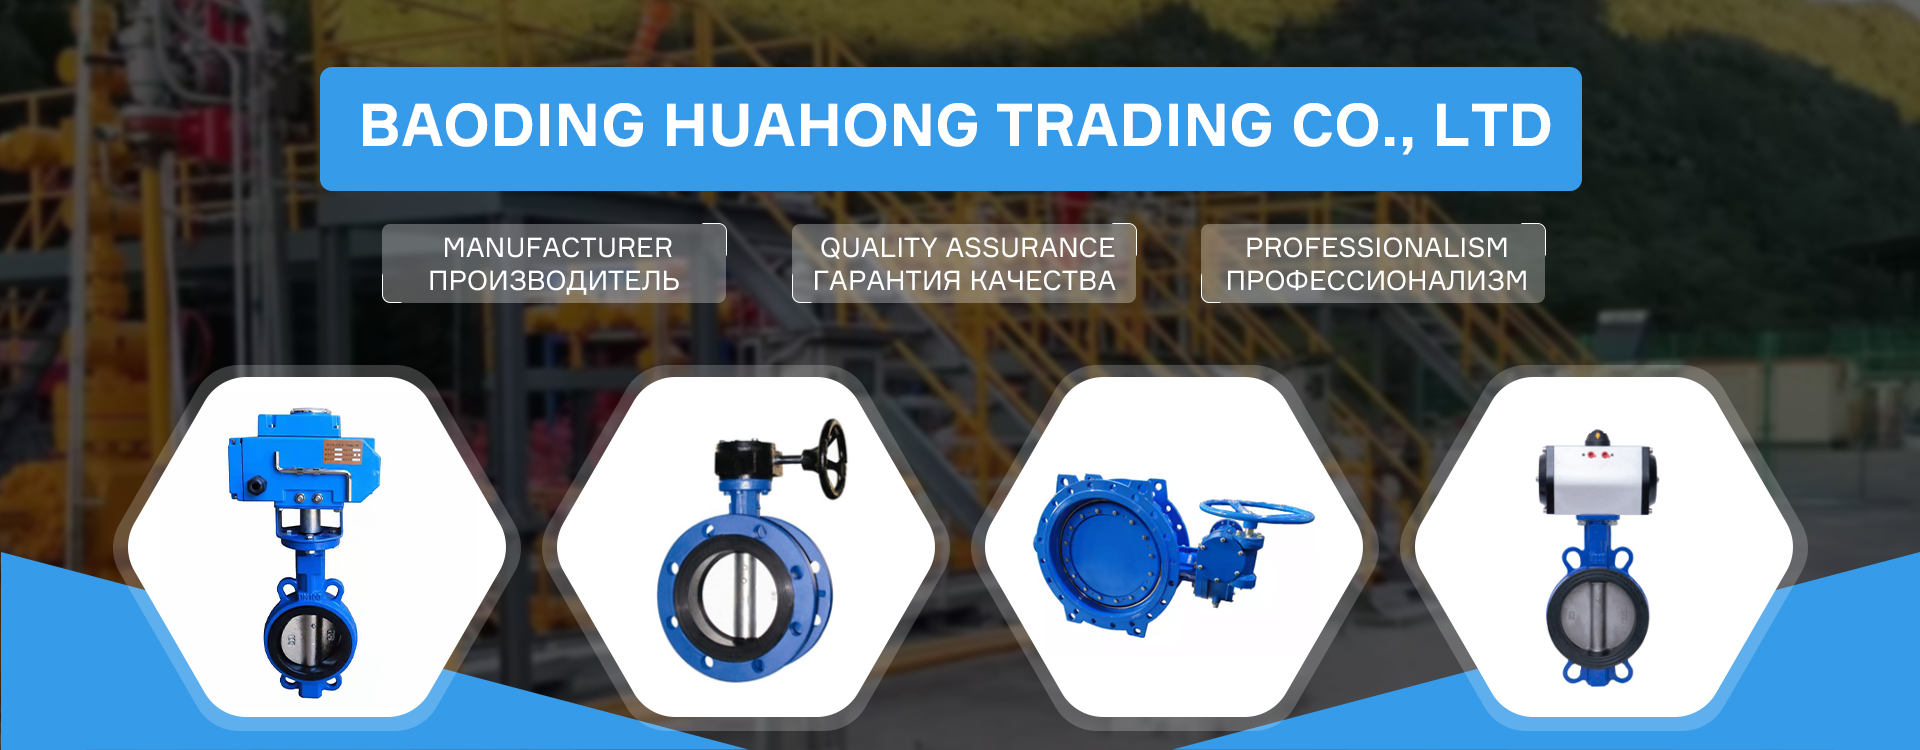 Baoding Huahong Trading Co., Ltd